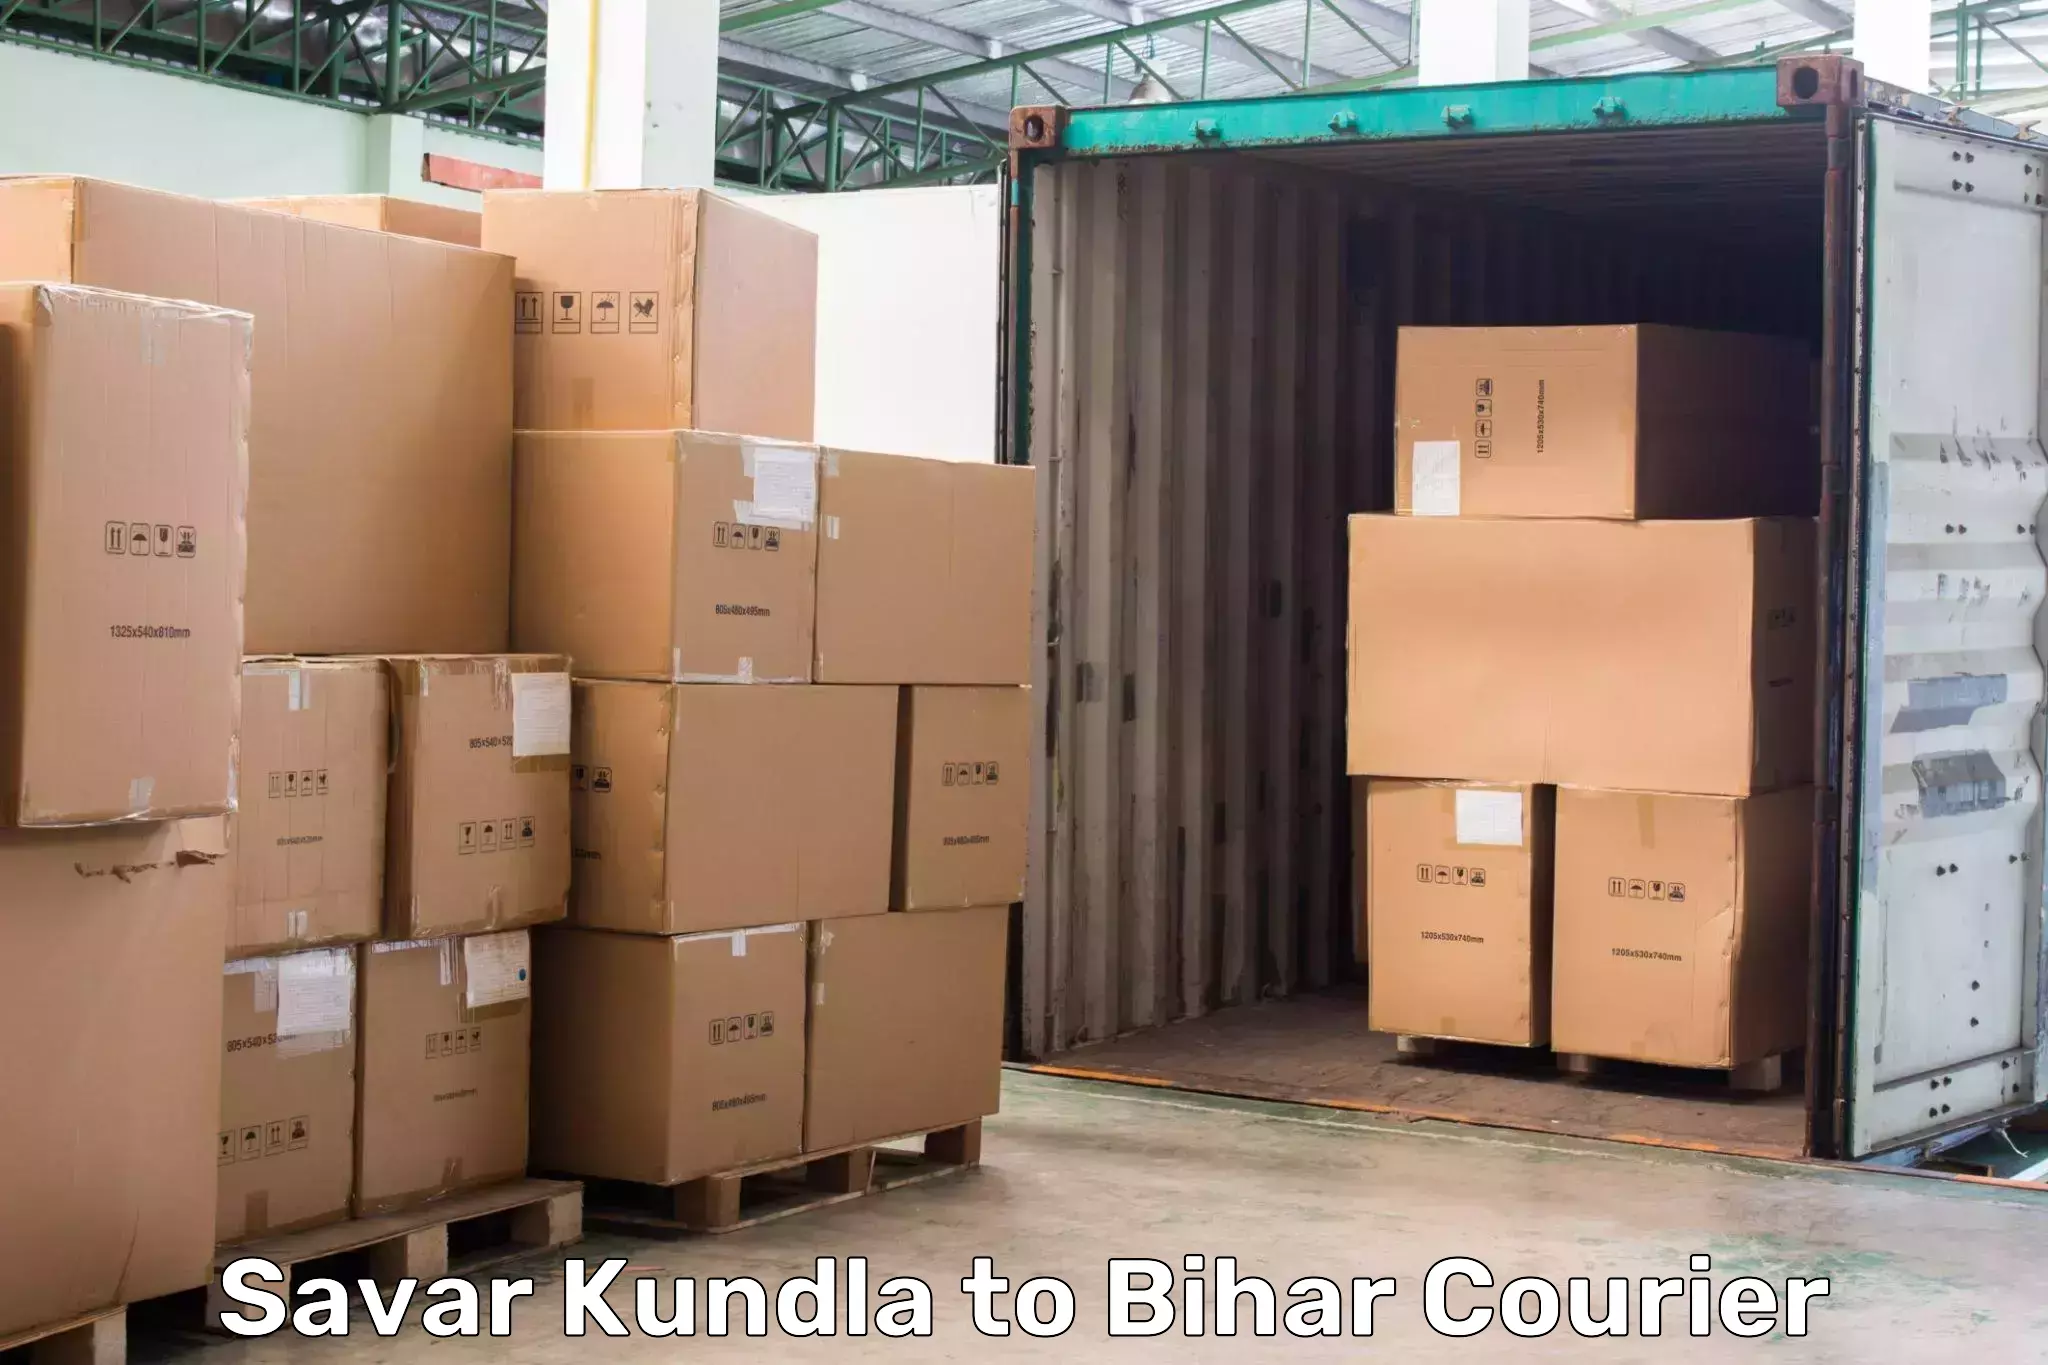 High-speed parcel service Savar Kundla to Bankipore